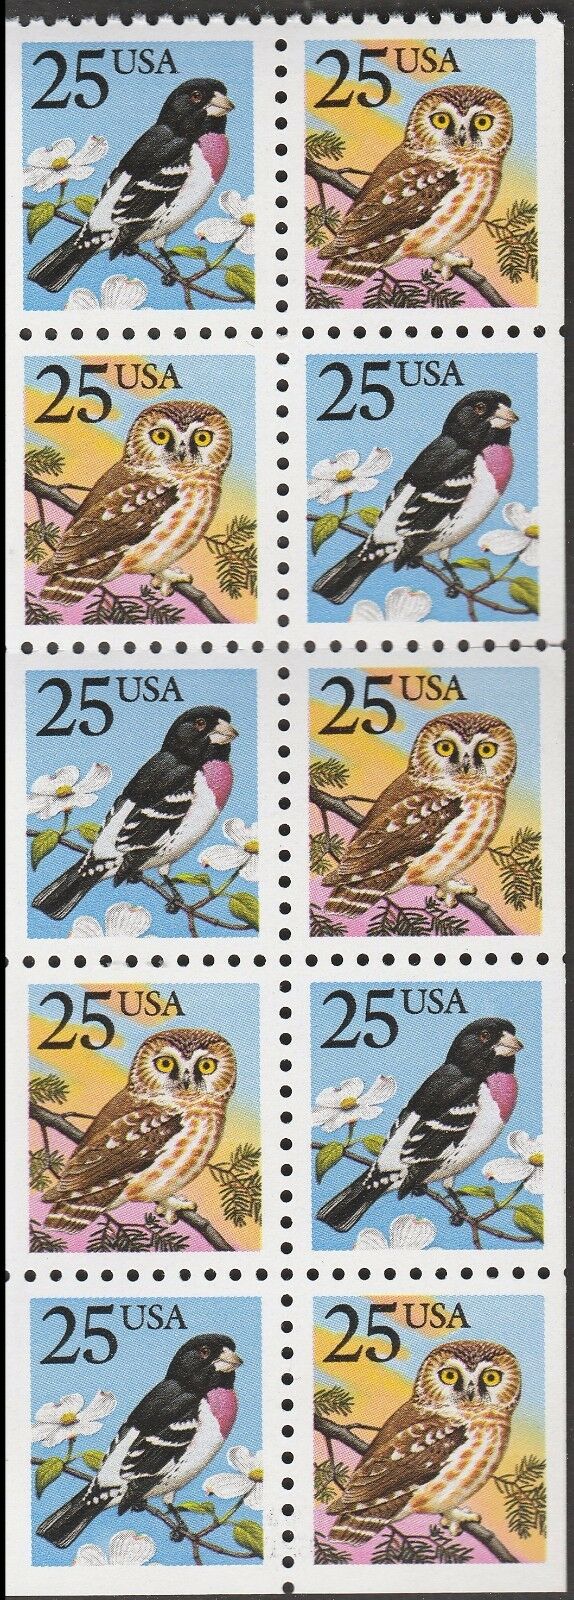 1988 - Grosbeak Bird & Owl Booklet Pane Of 10 25c Postage Stamps Sc# 2284-2285, BK160 - MNH - CX829a